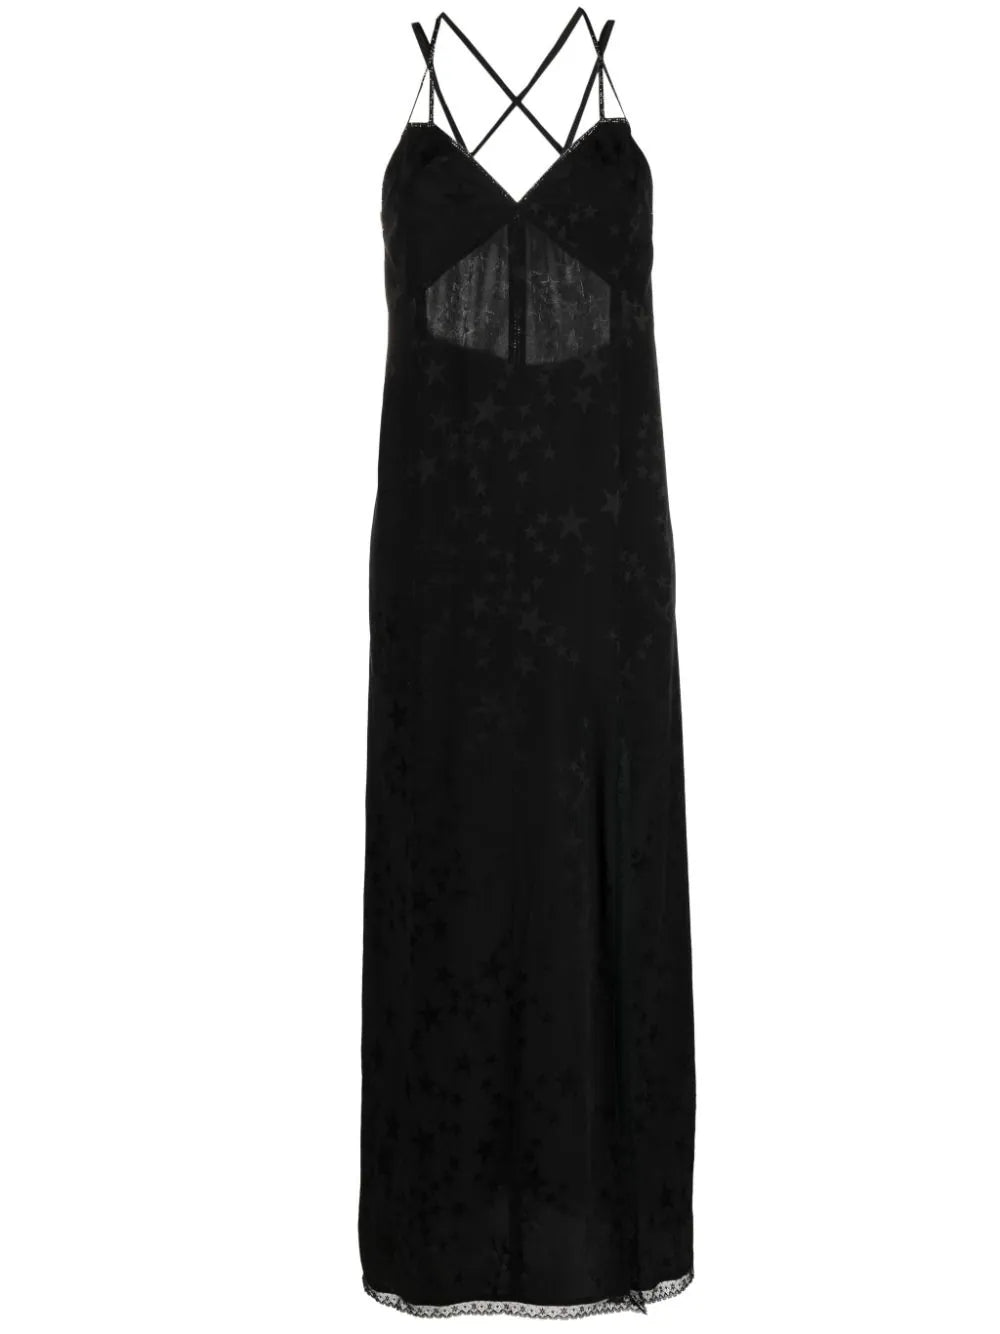 ROHAL STARS STRASS dress, black